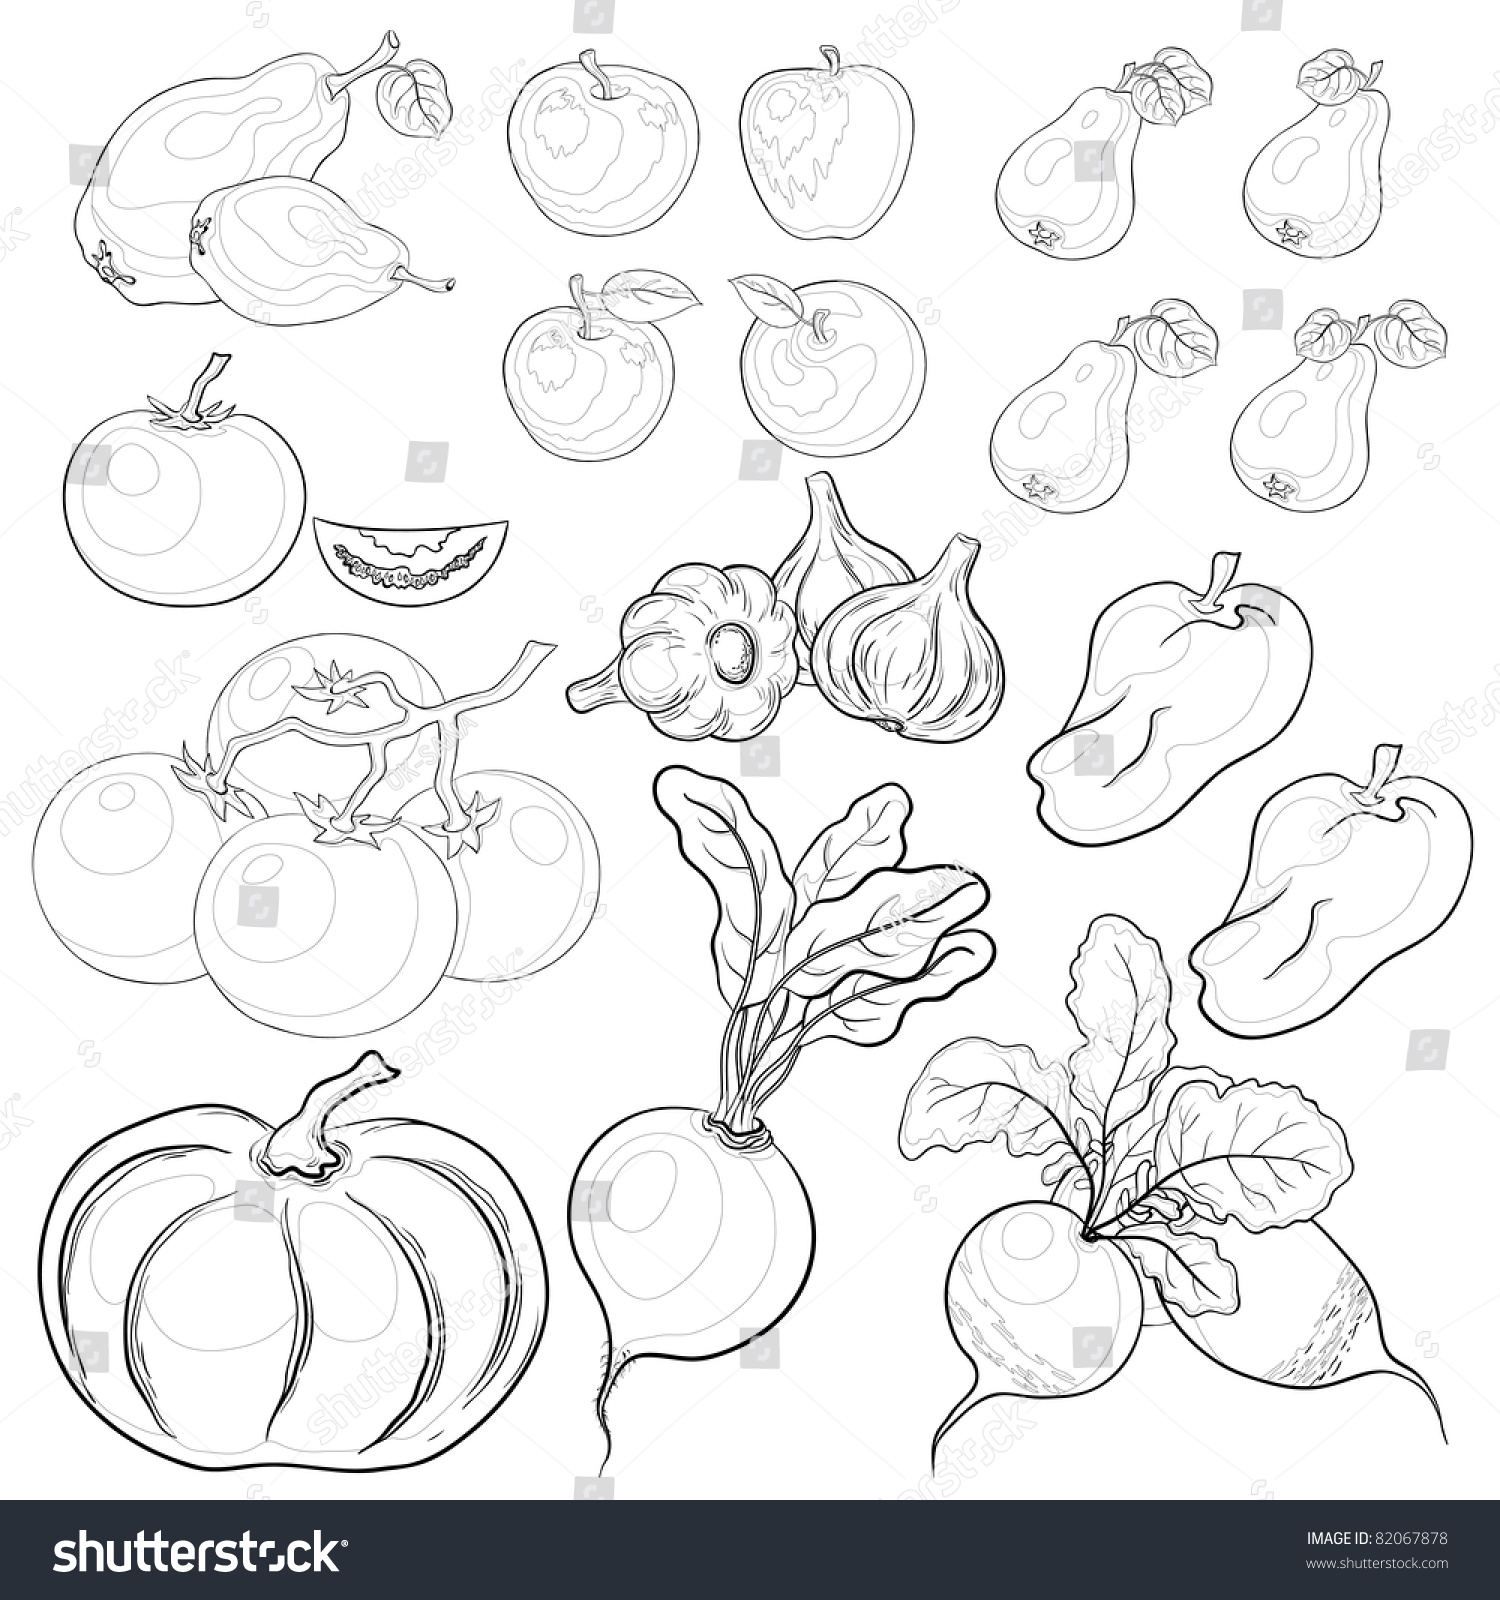 set: various vegetables and fruits, monochrome contours #82067878